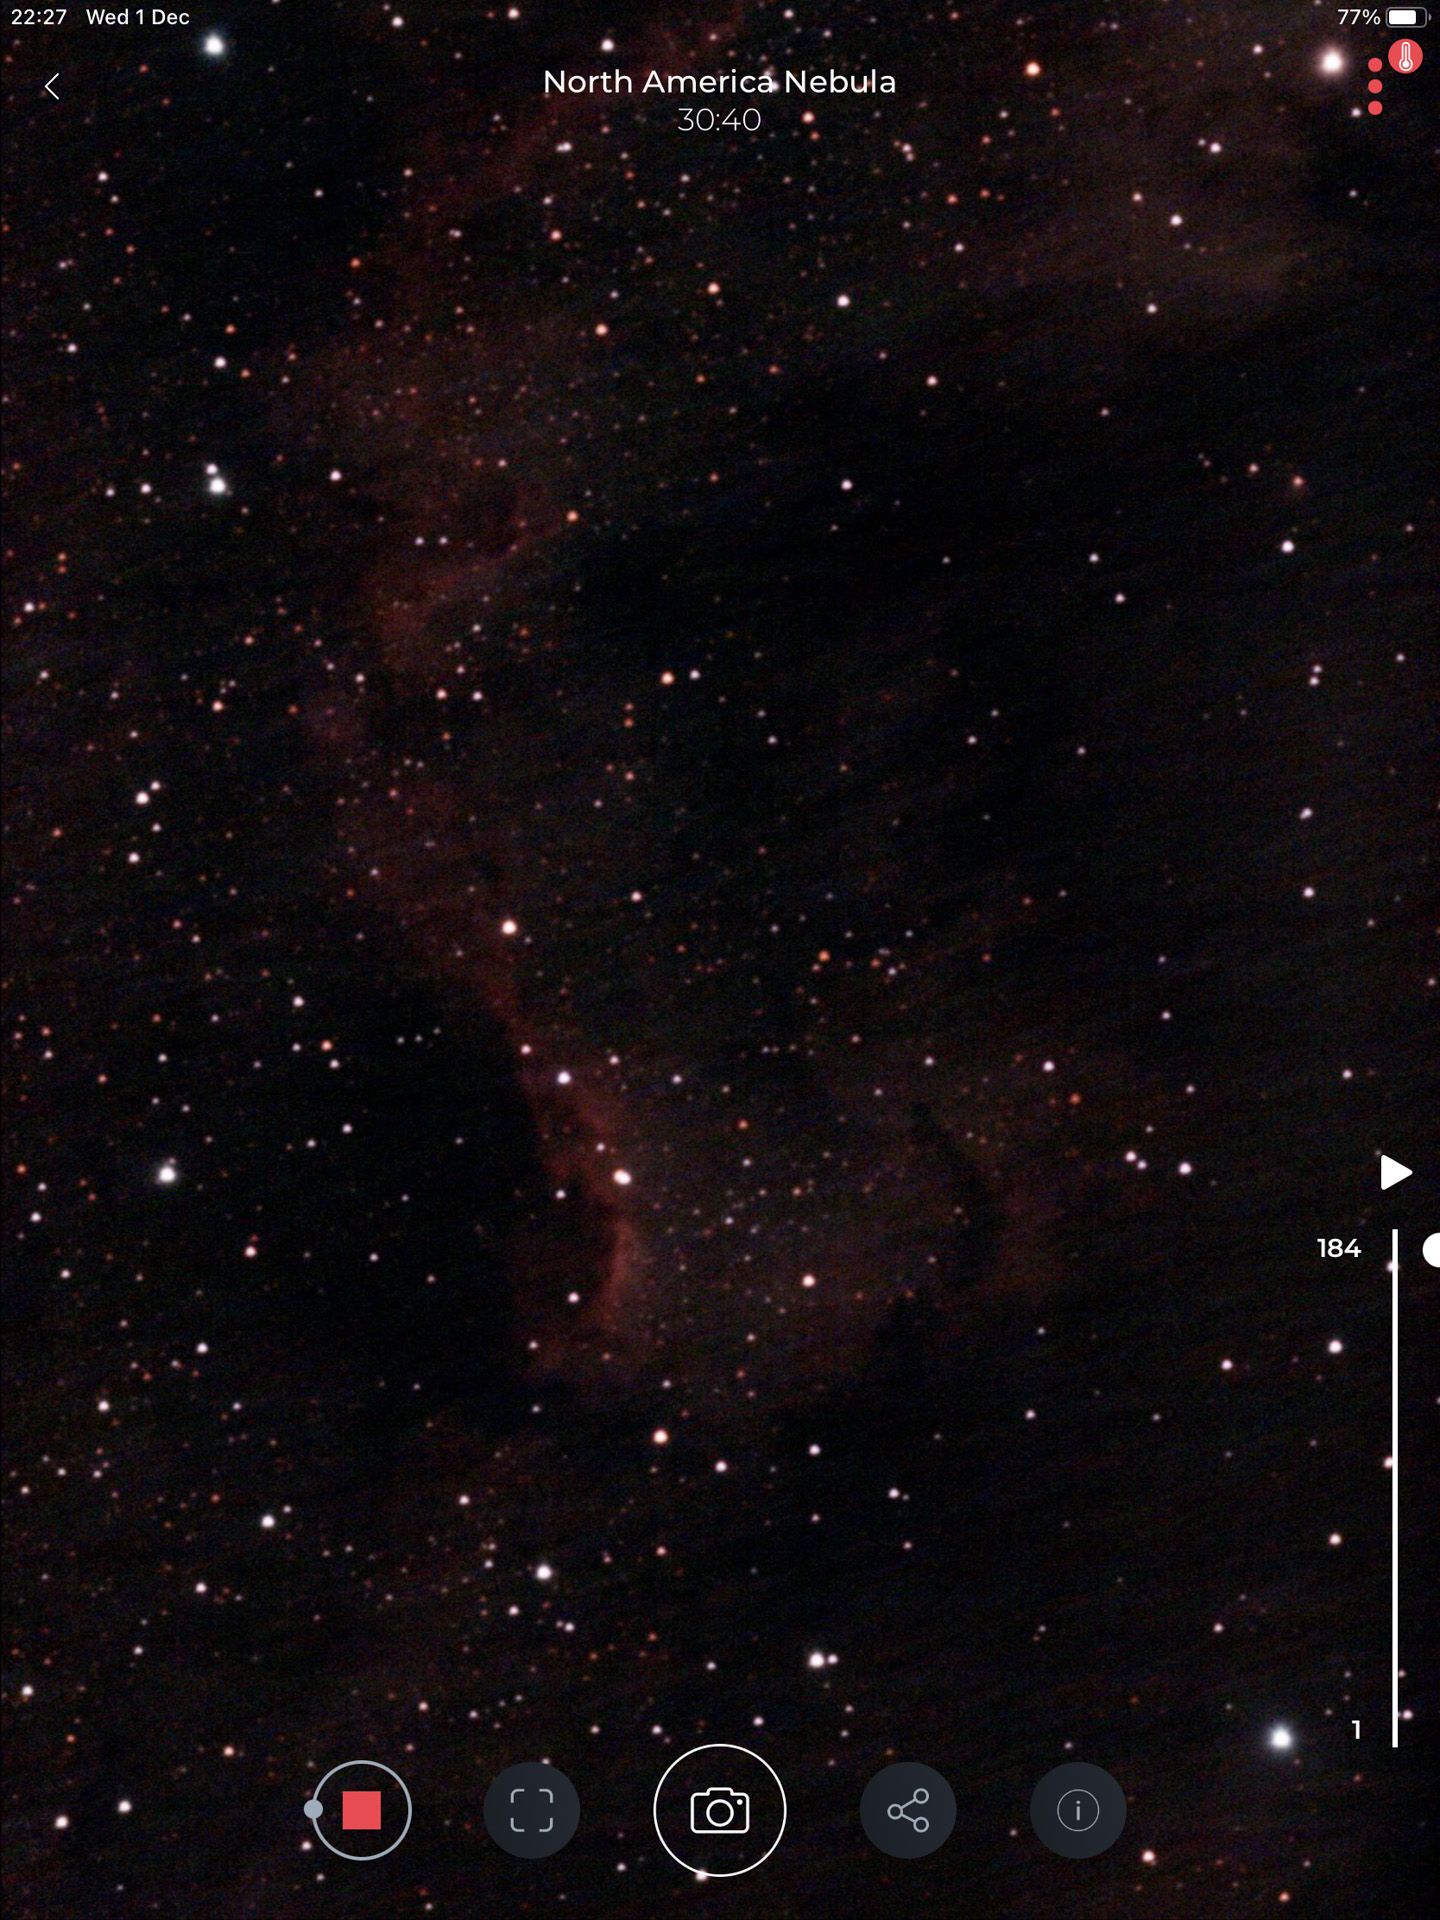 stellina app - north american nebula 186 photos